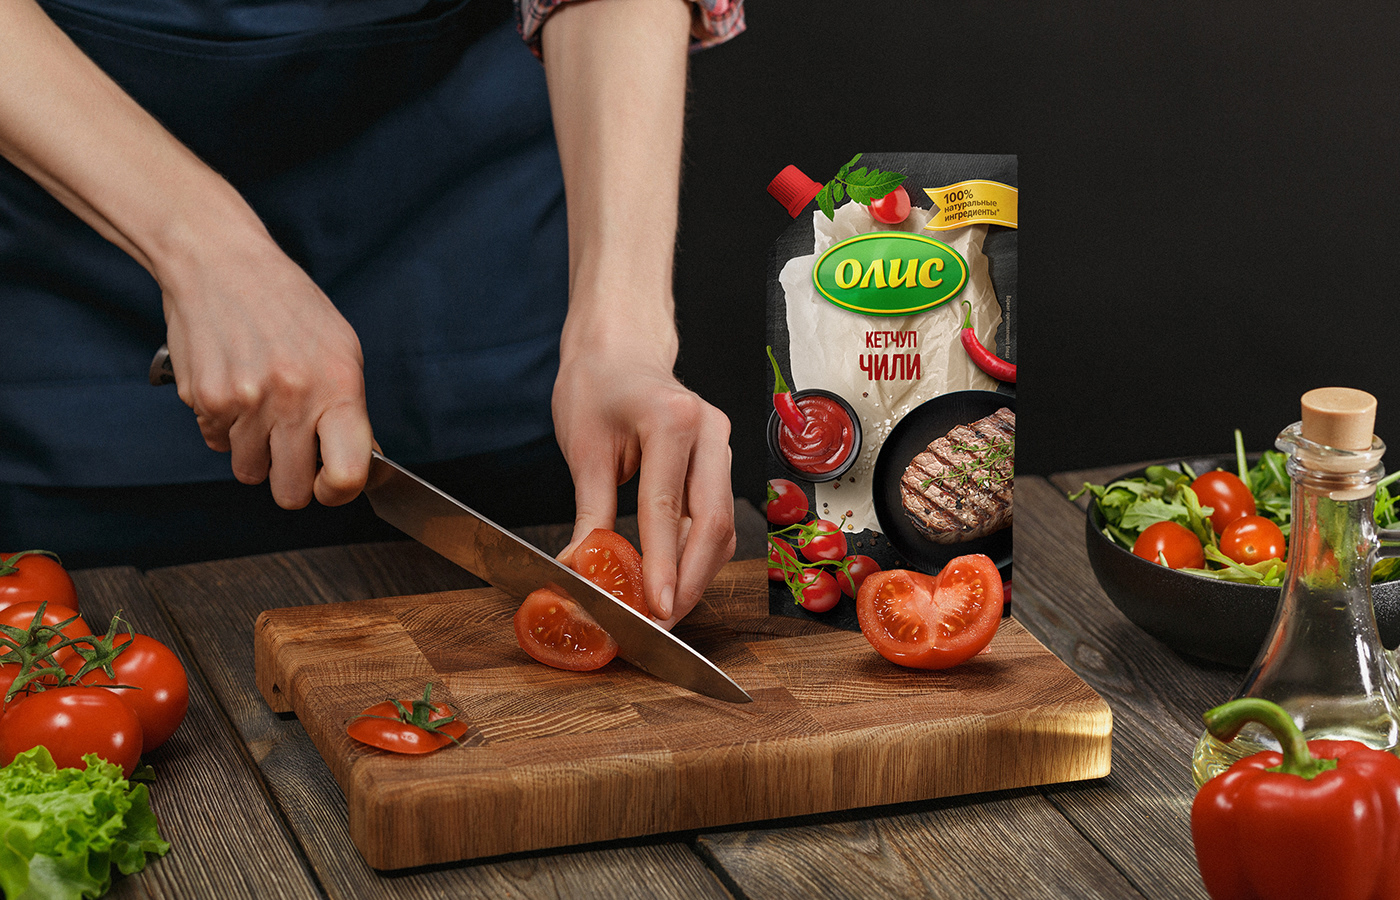 ketchup Label mayonnaise mustard olis Olive Oil Packaging Retail